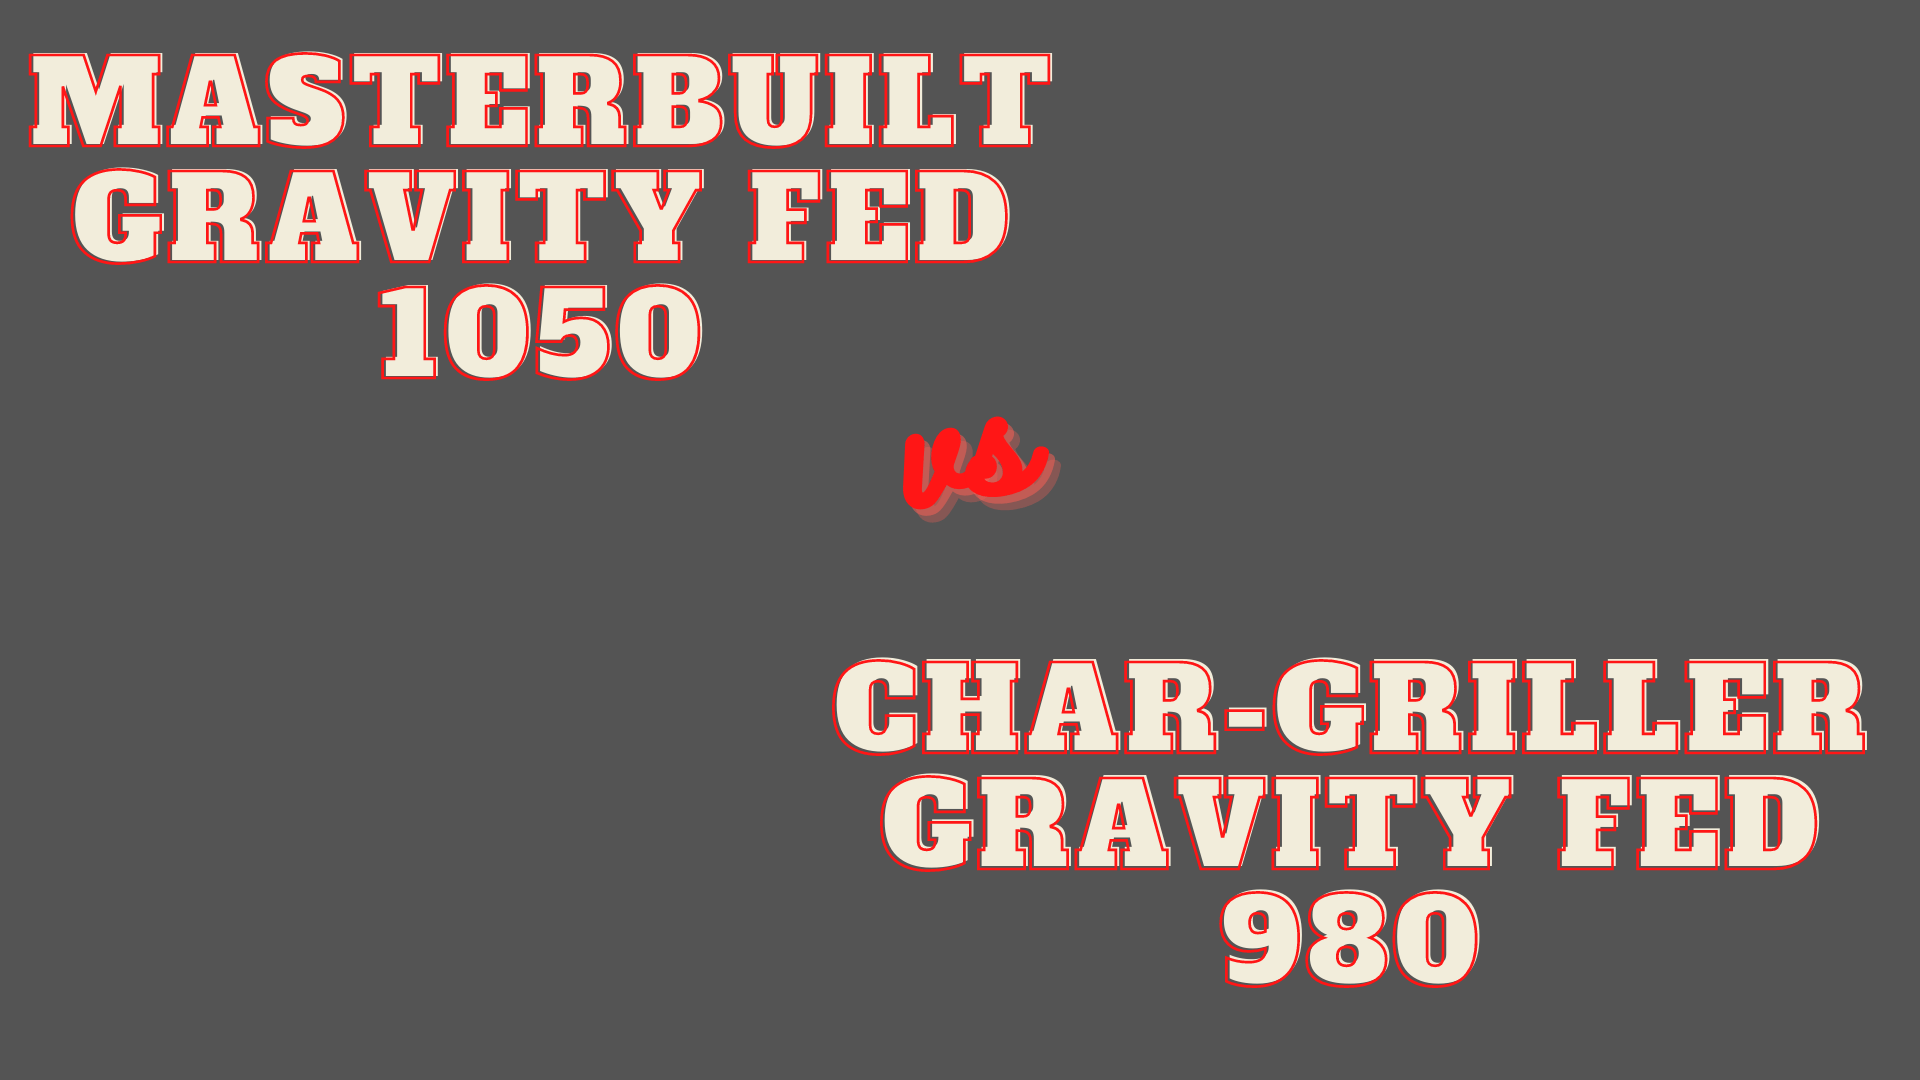 Char Griller 980 vs Masterbuilt 1050